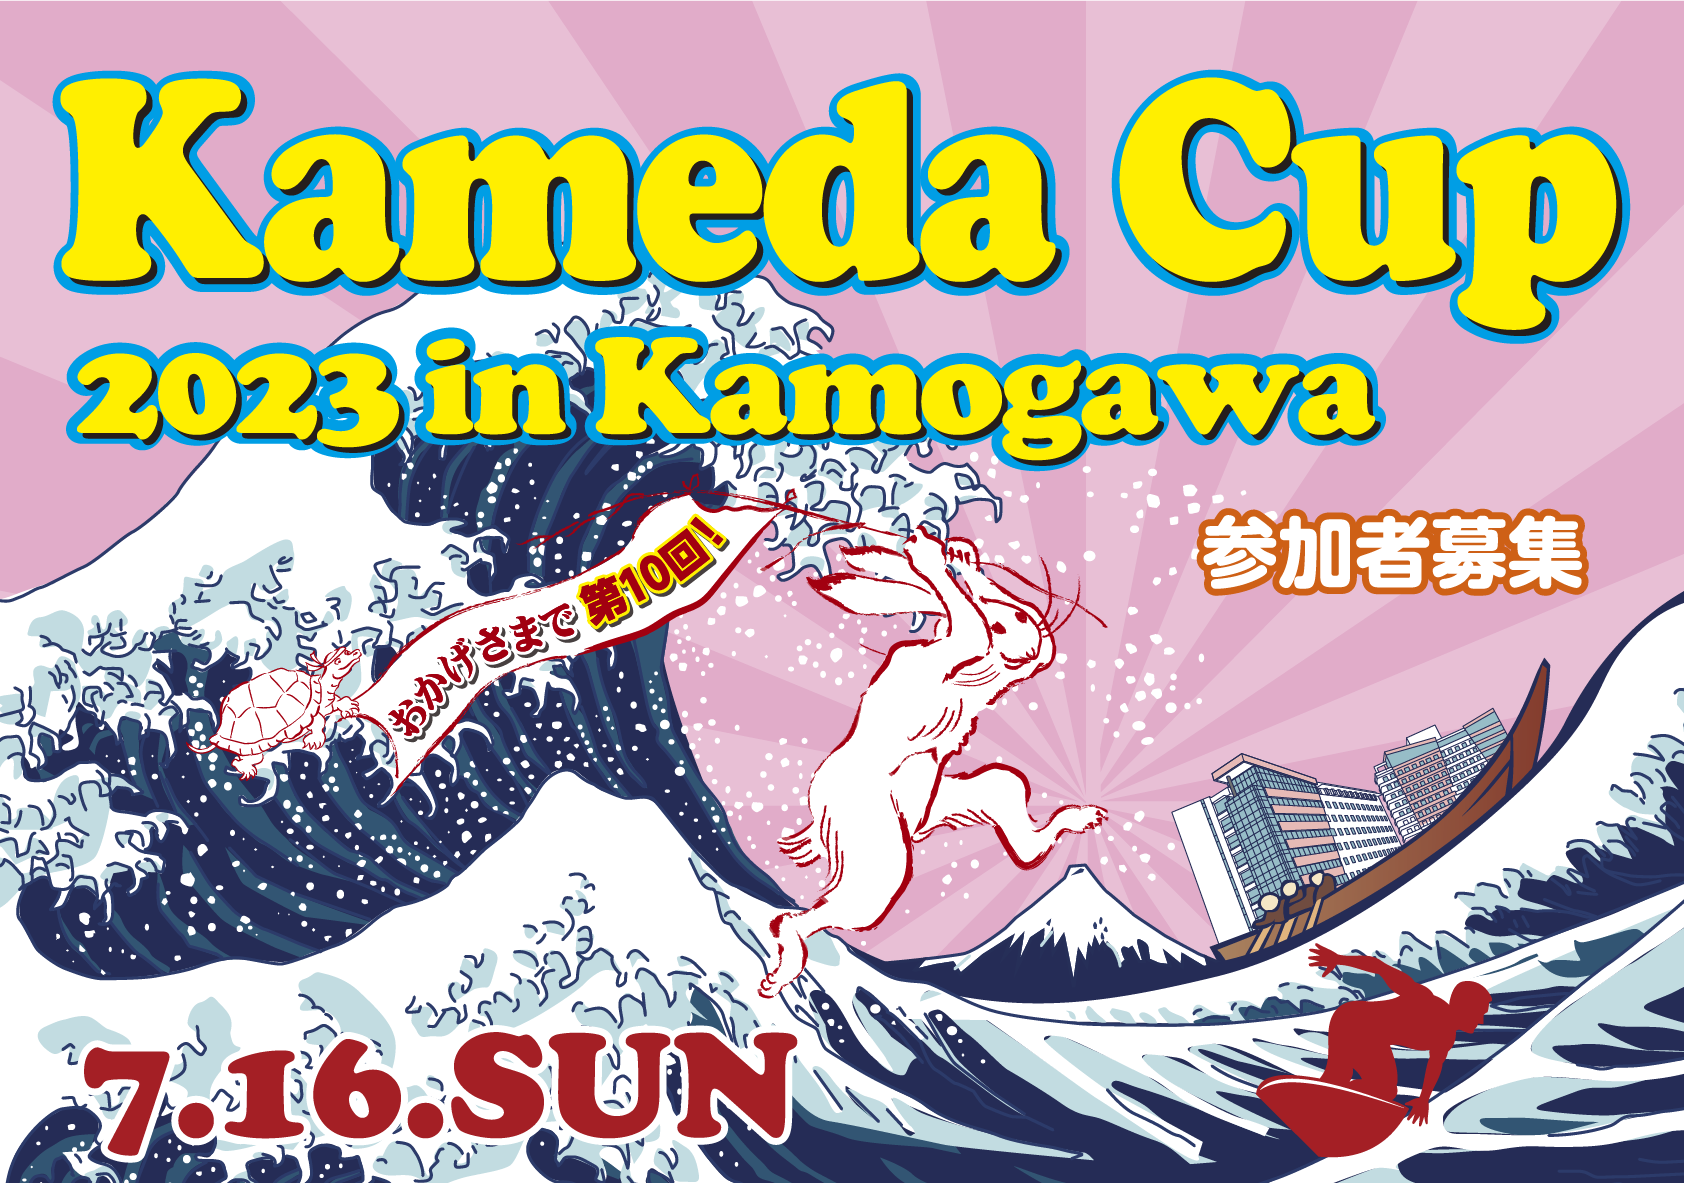 Kameda Cup 2023 in Kamogawa